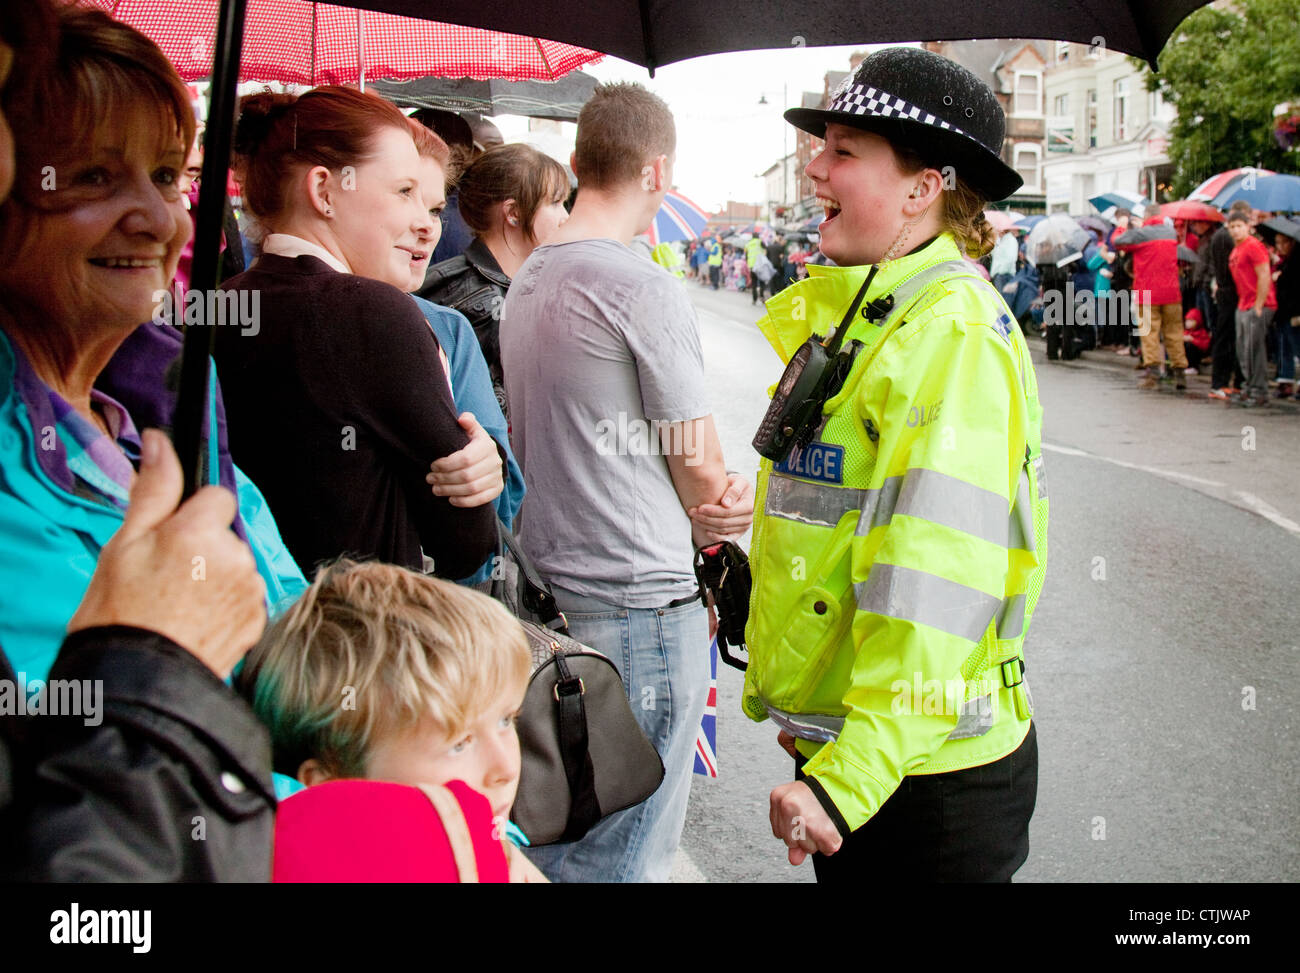 Cheerful policewoman on parle avec le public, UK Banque D'Images